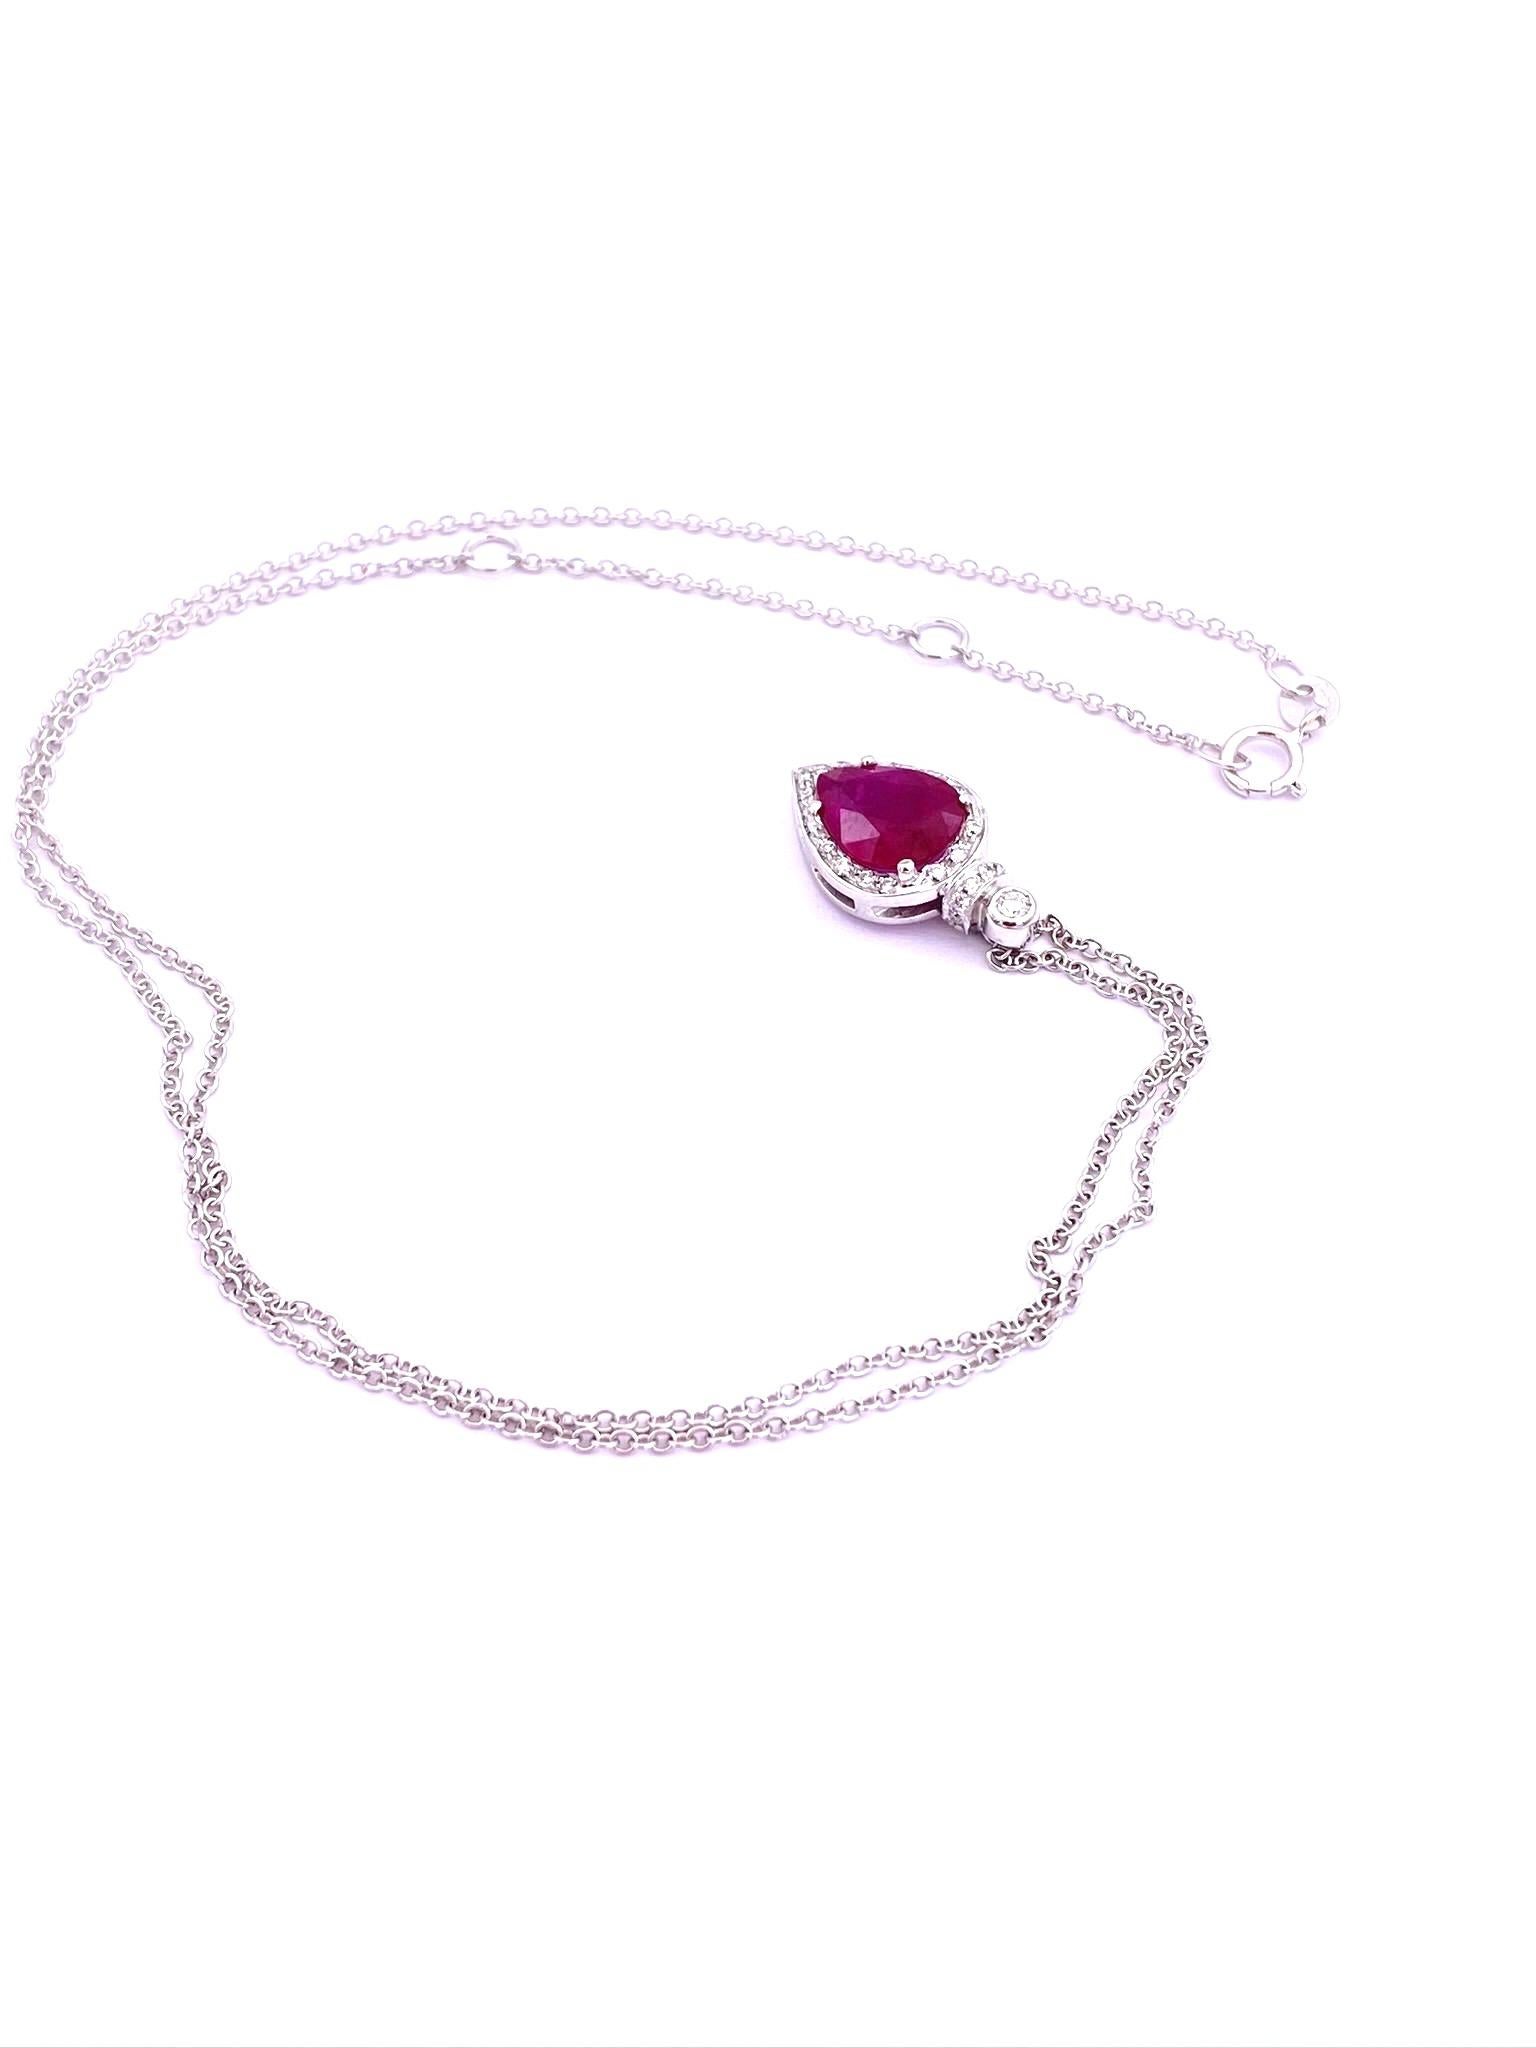  2.60 Karat Ruby 0, 30 White Diamonds 18 Karat White Gold Chain Modern Necklace For Sale 3